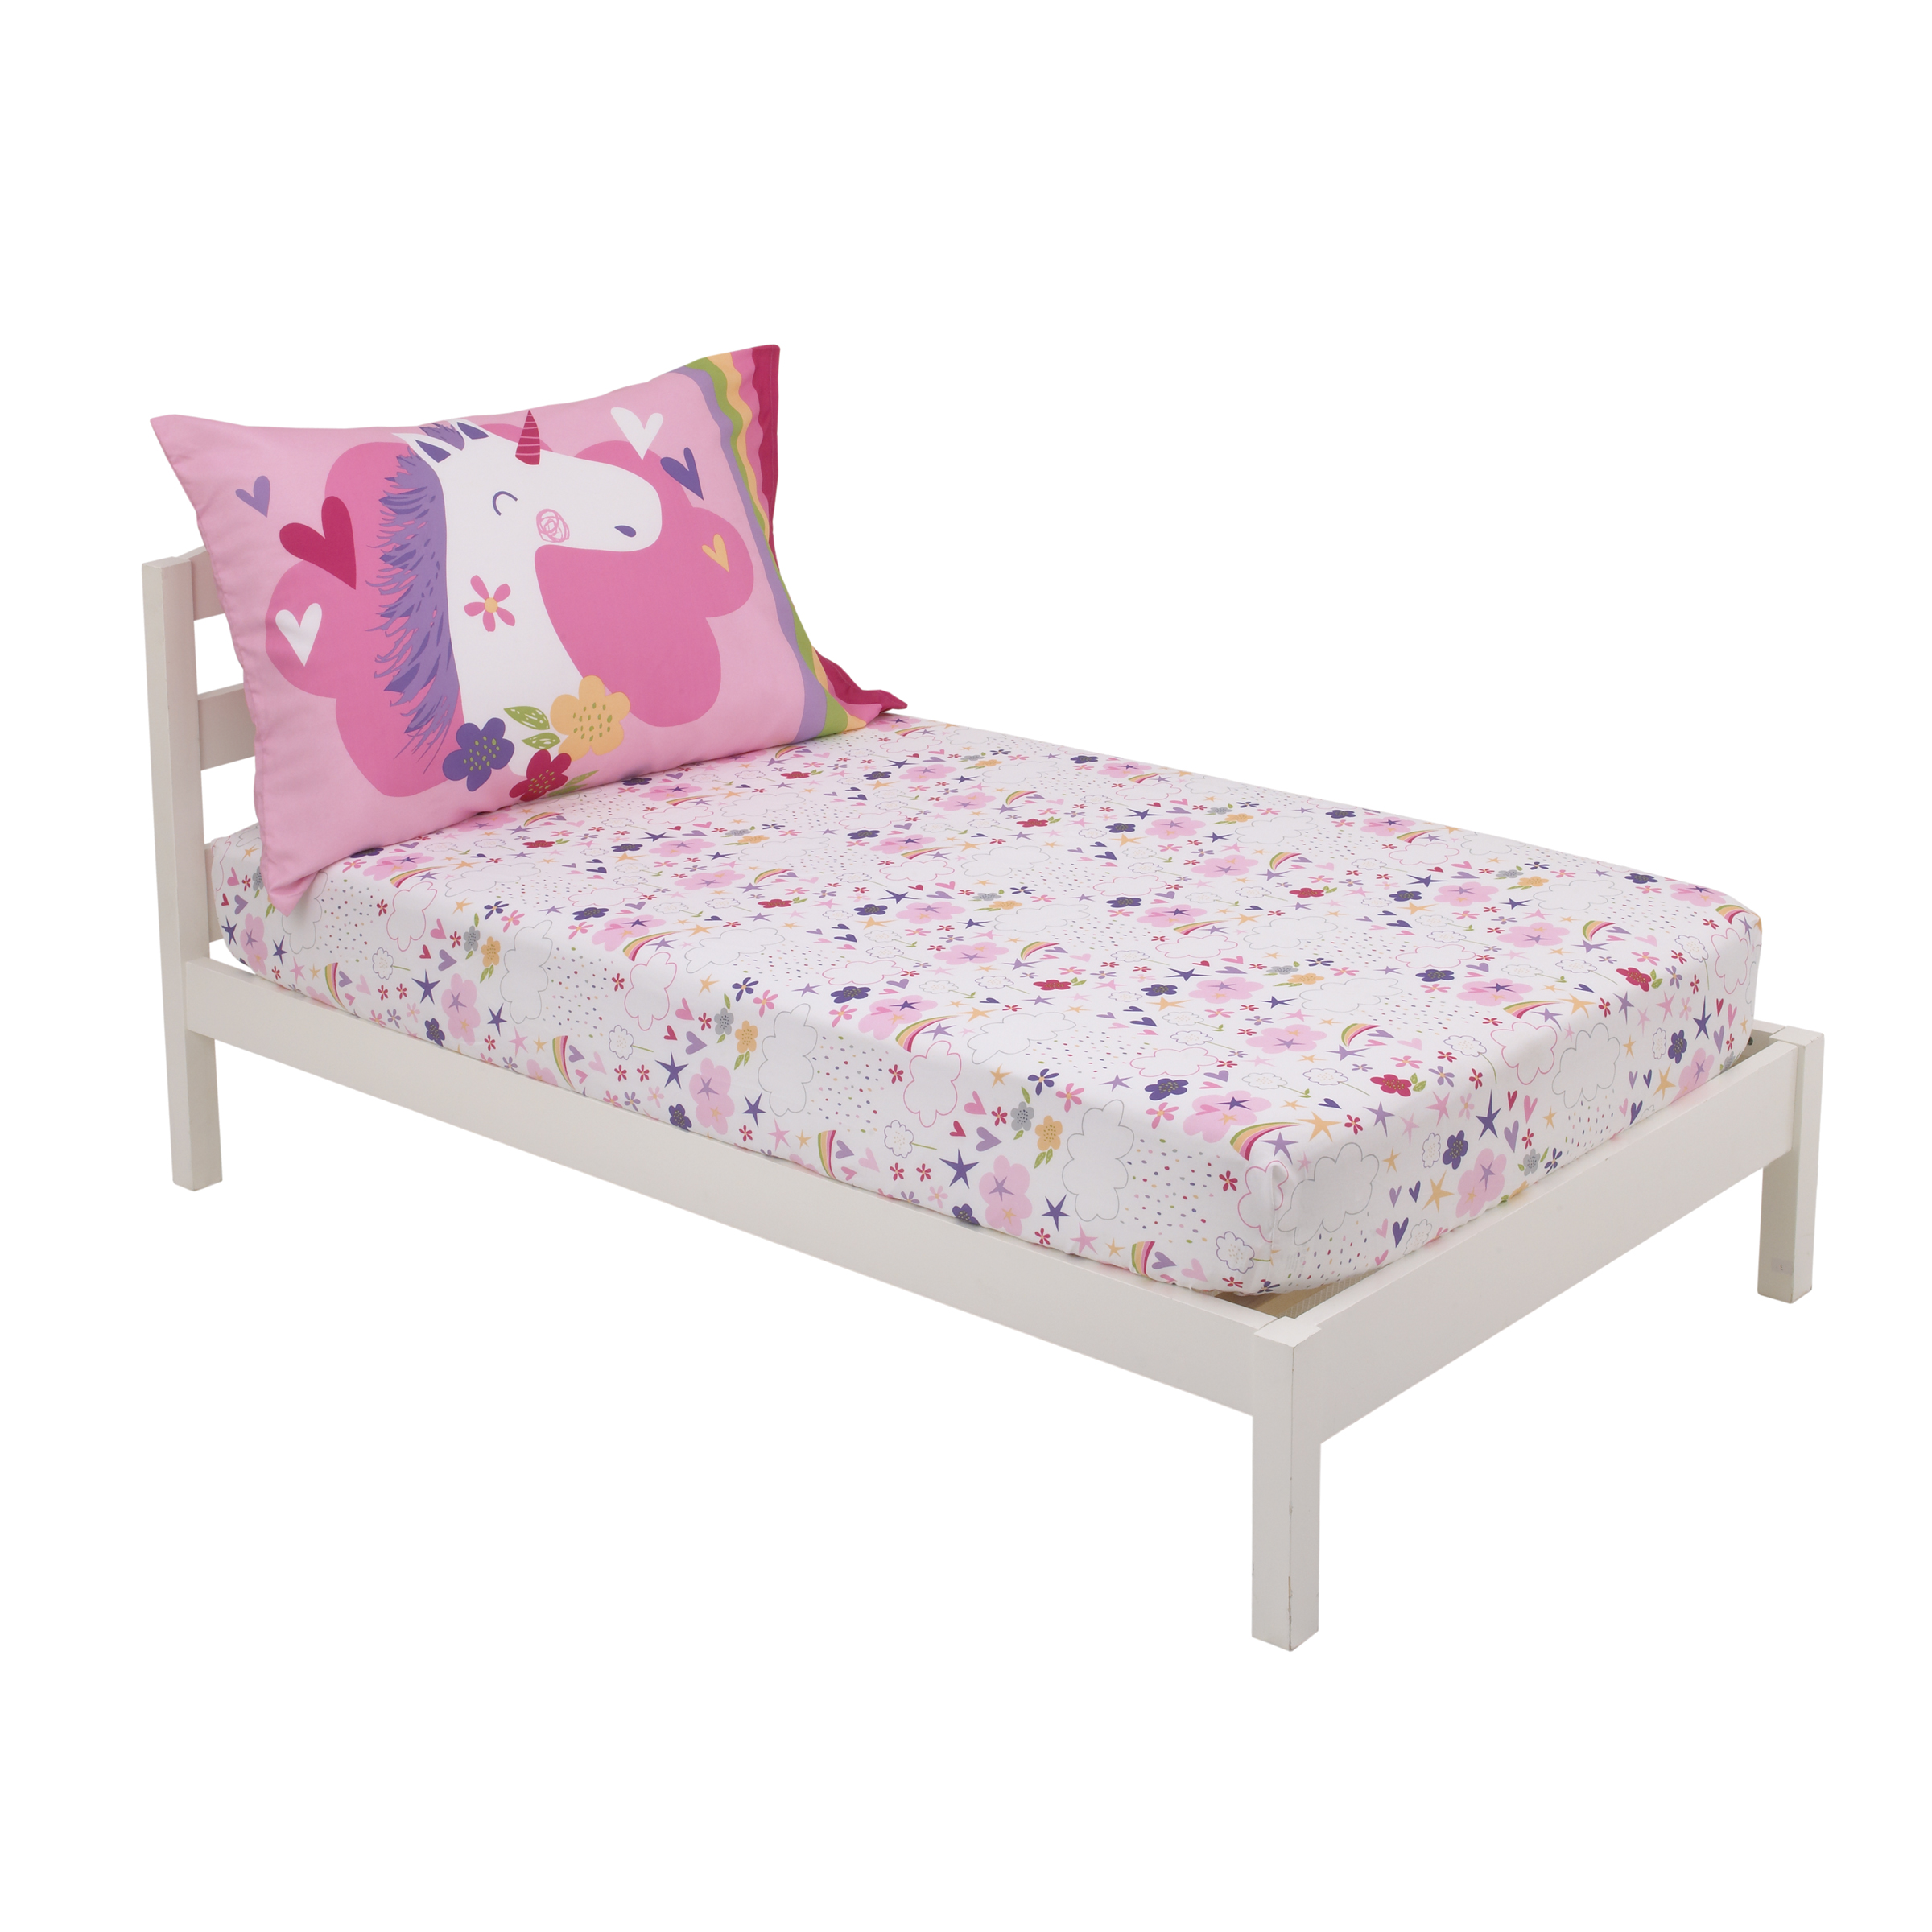 New 2 Piece Unicorn Sheet Set Toddler Bed Fitted Sheet /& Pillowcase Set